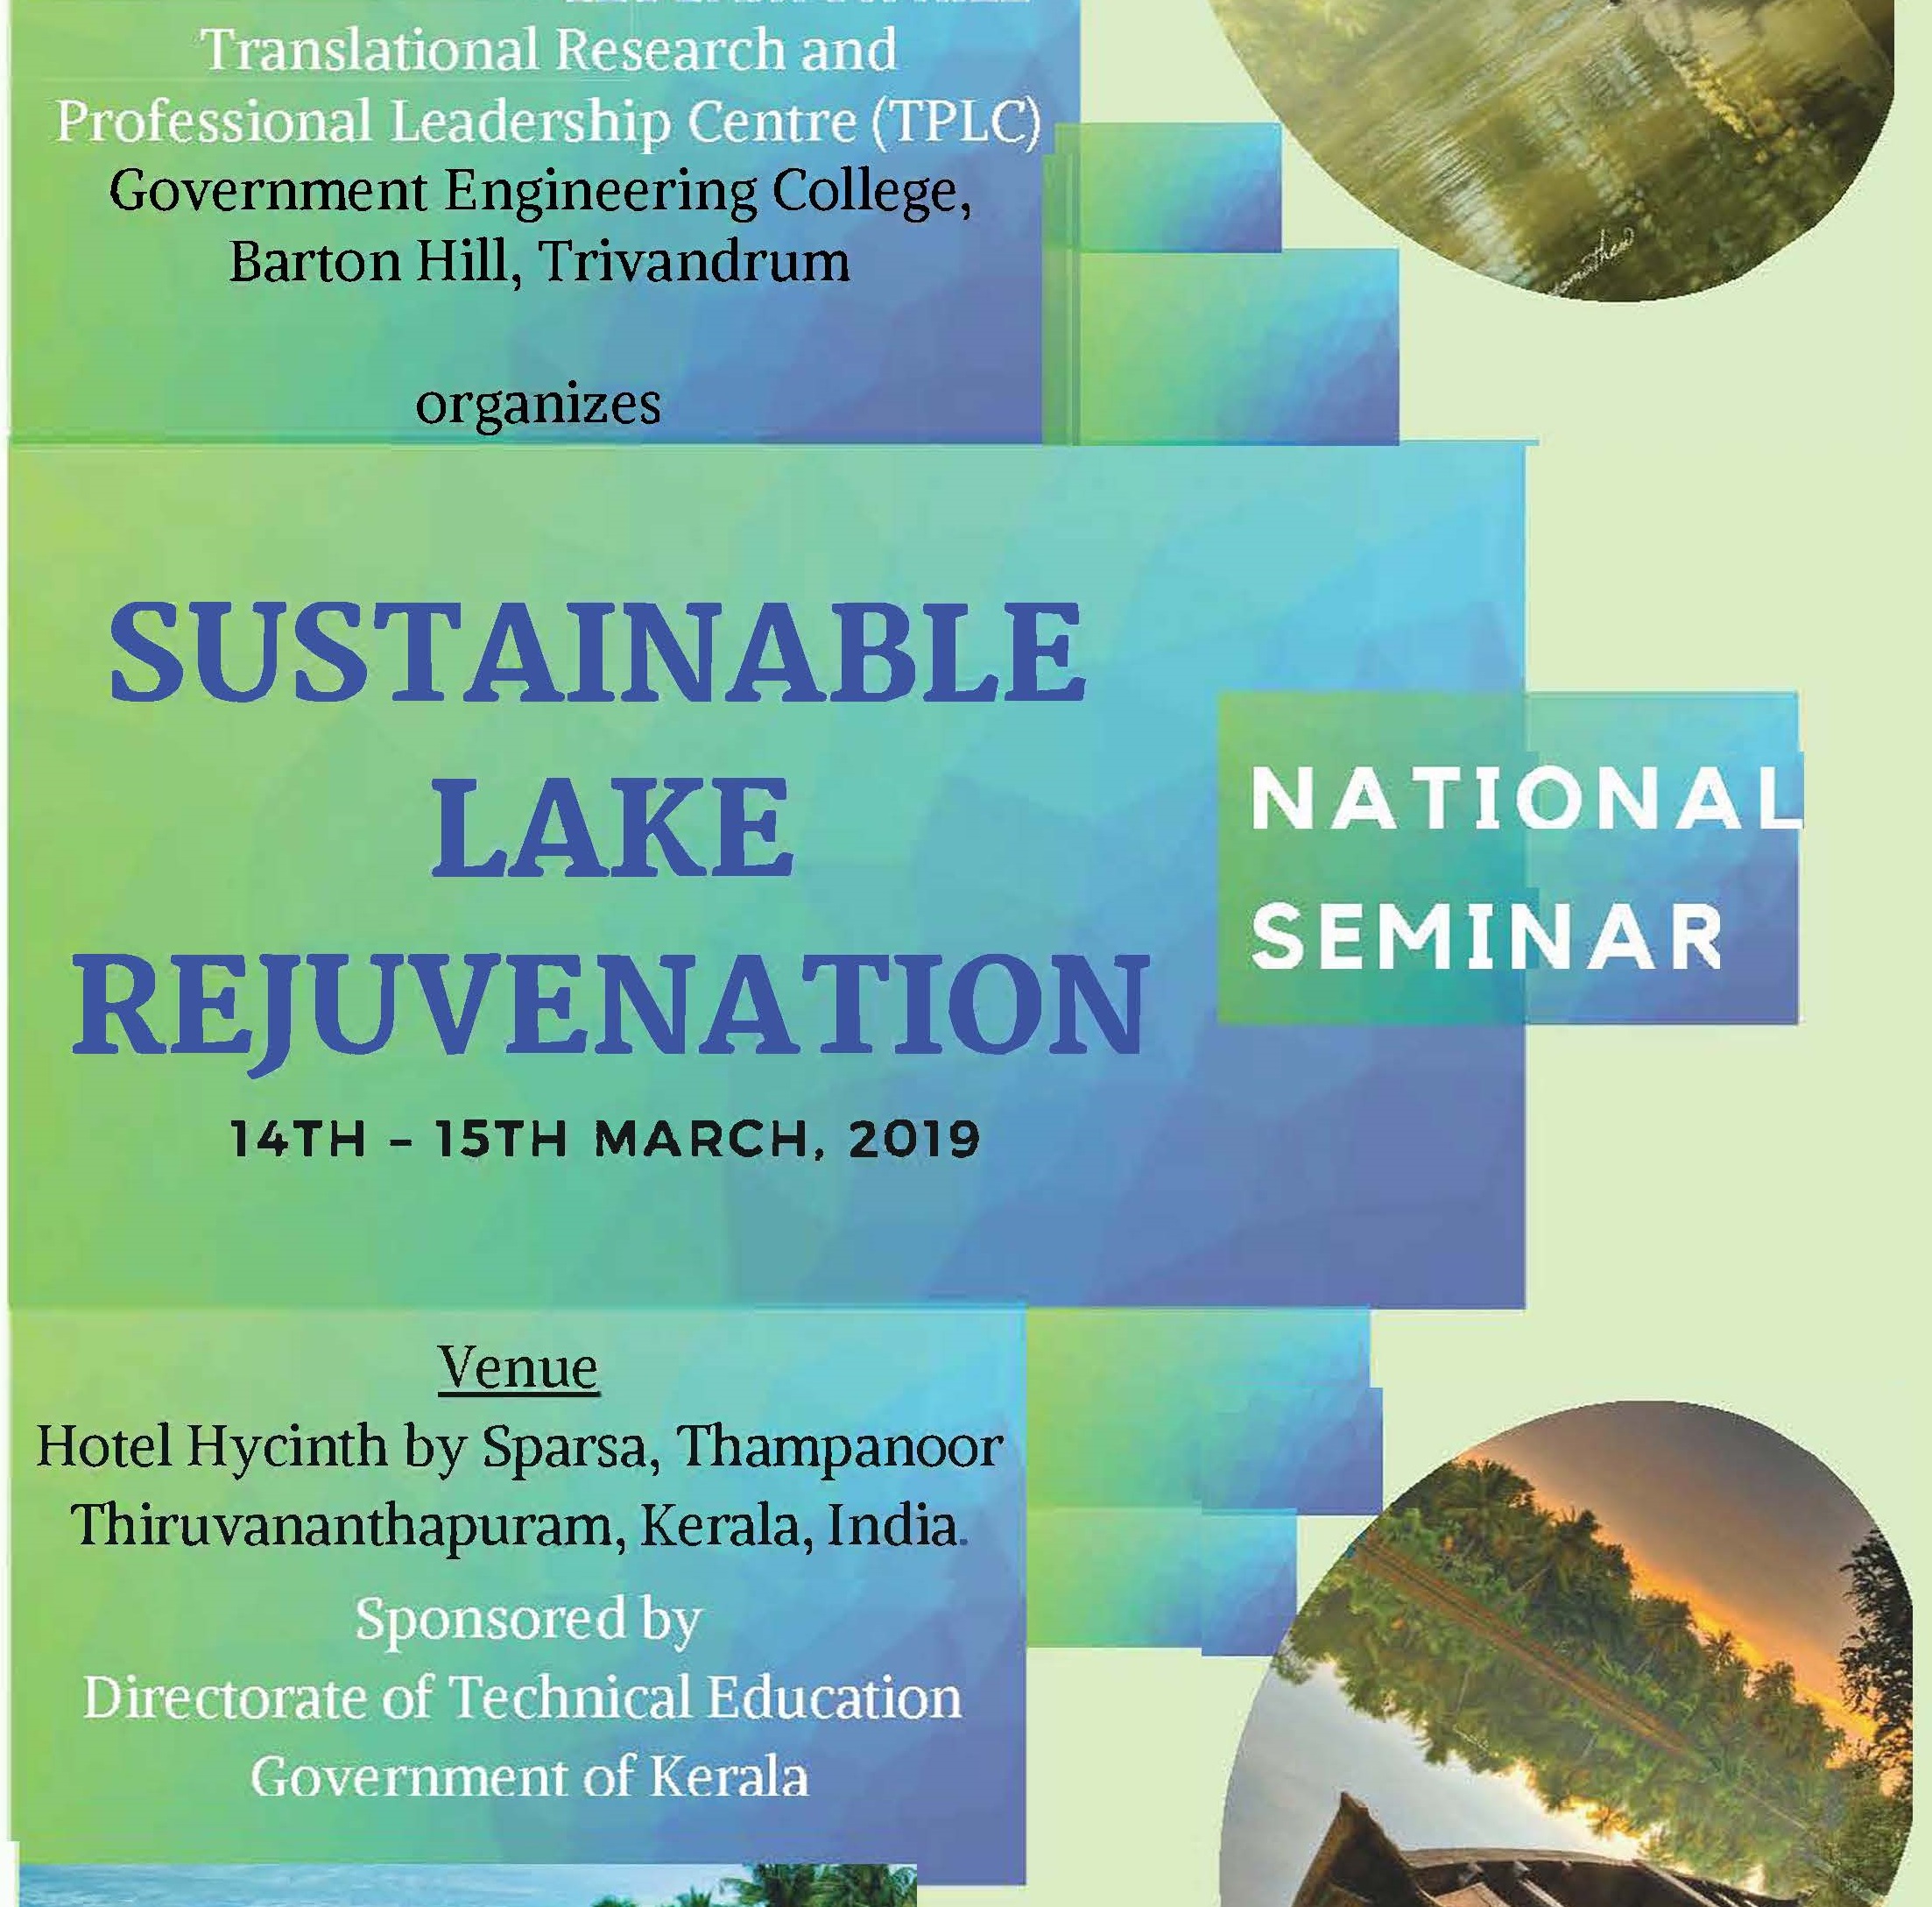 National Seminar on Sustainable Lake Rejuvenation 2019